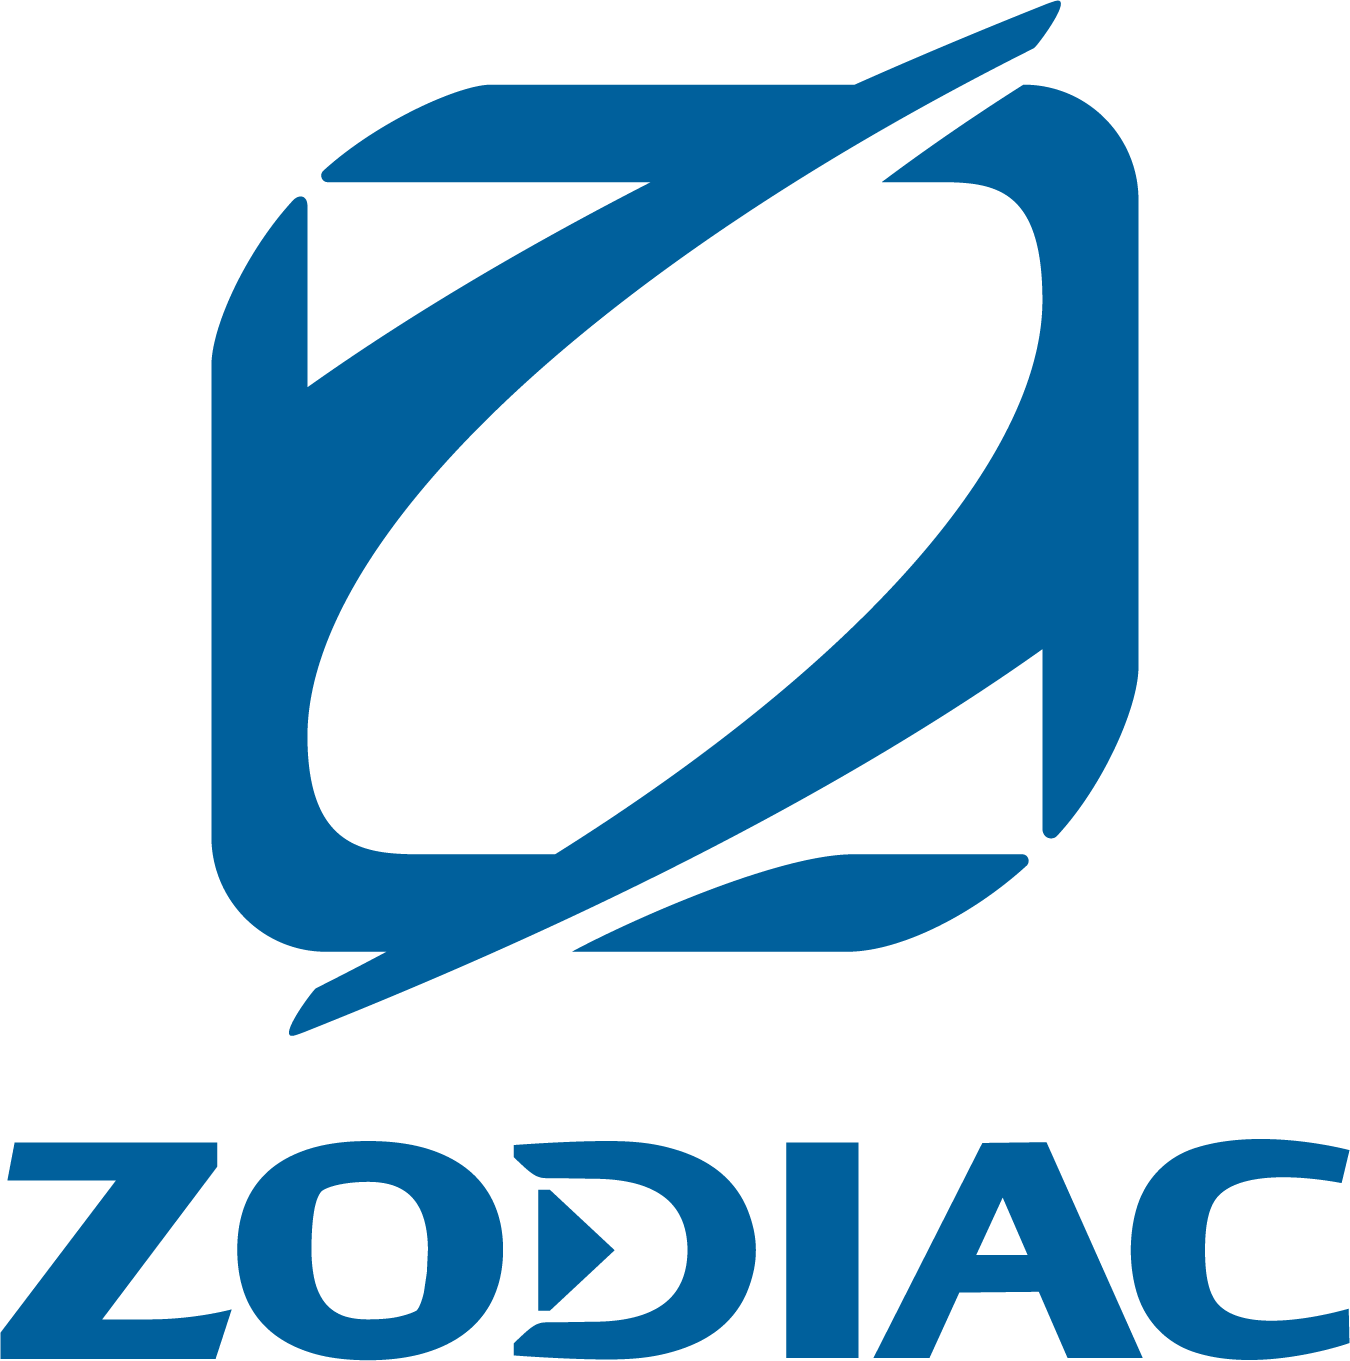 Zodiac logo_blue